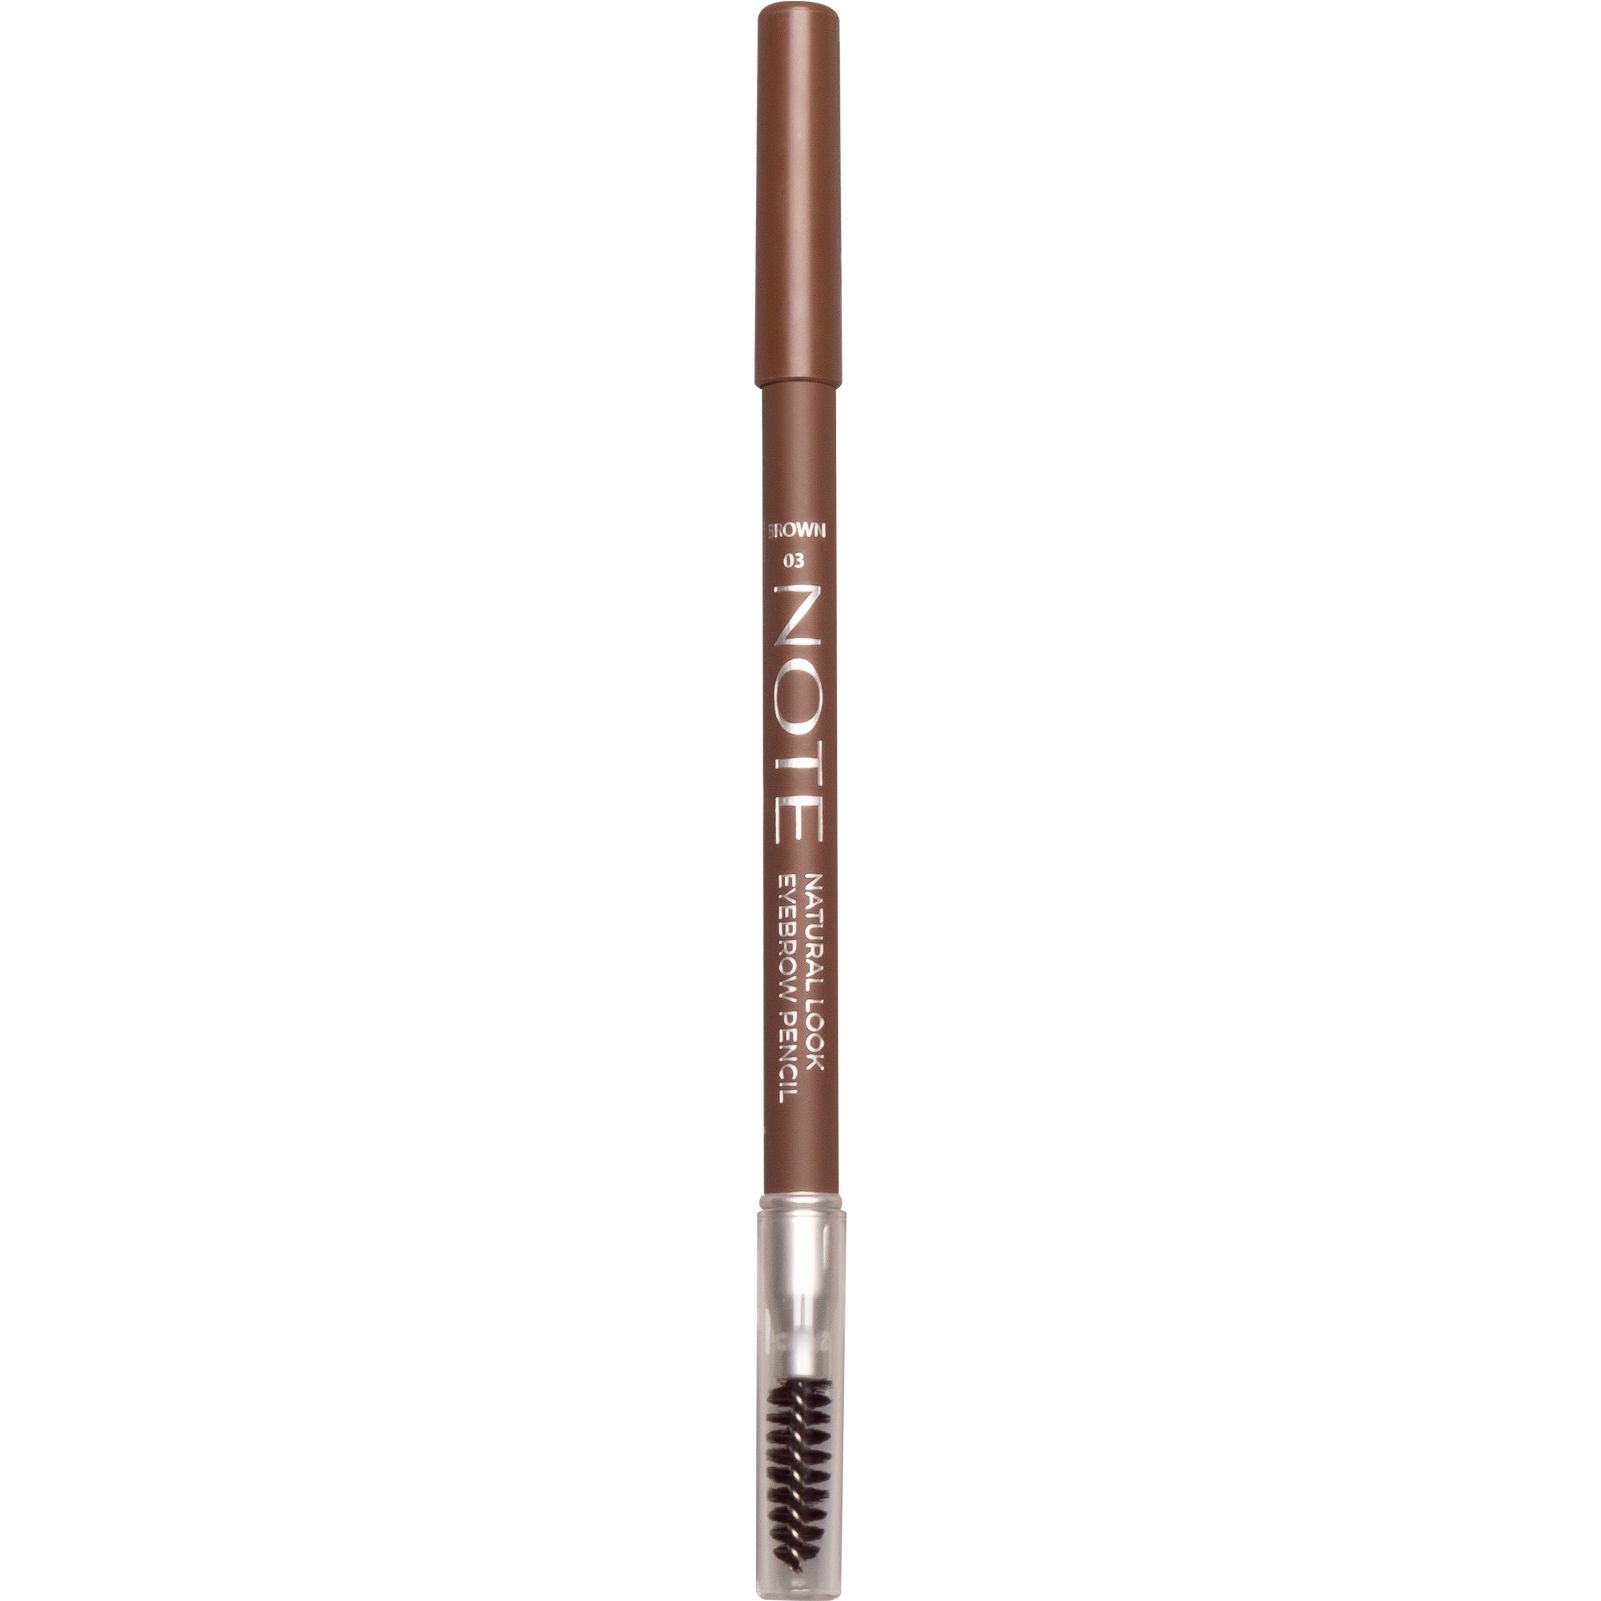 Карандаш для бровей Note Cosmetique Natural Look Eyebrow Pencil Brown тон 3, 1.08 г - фото 1